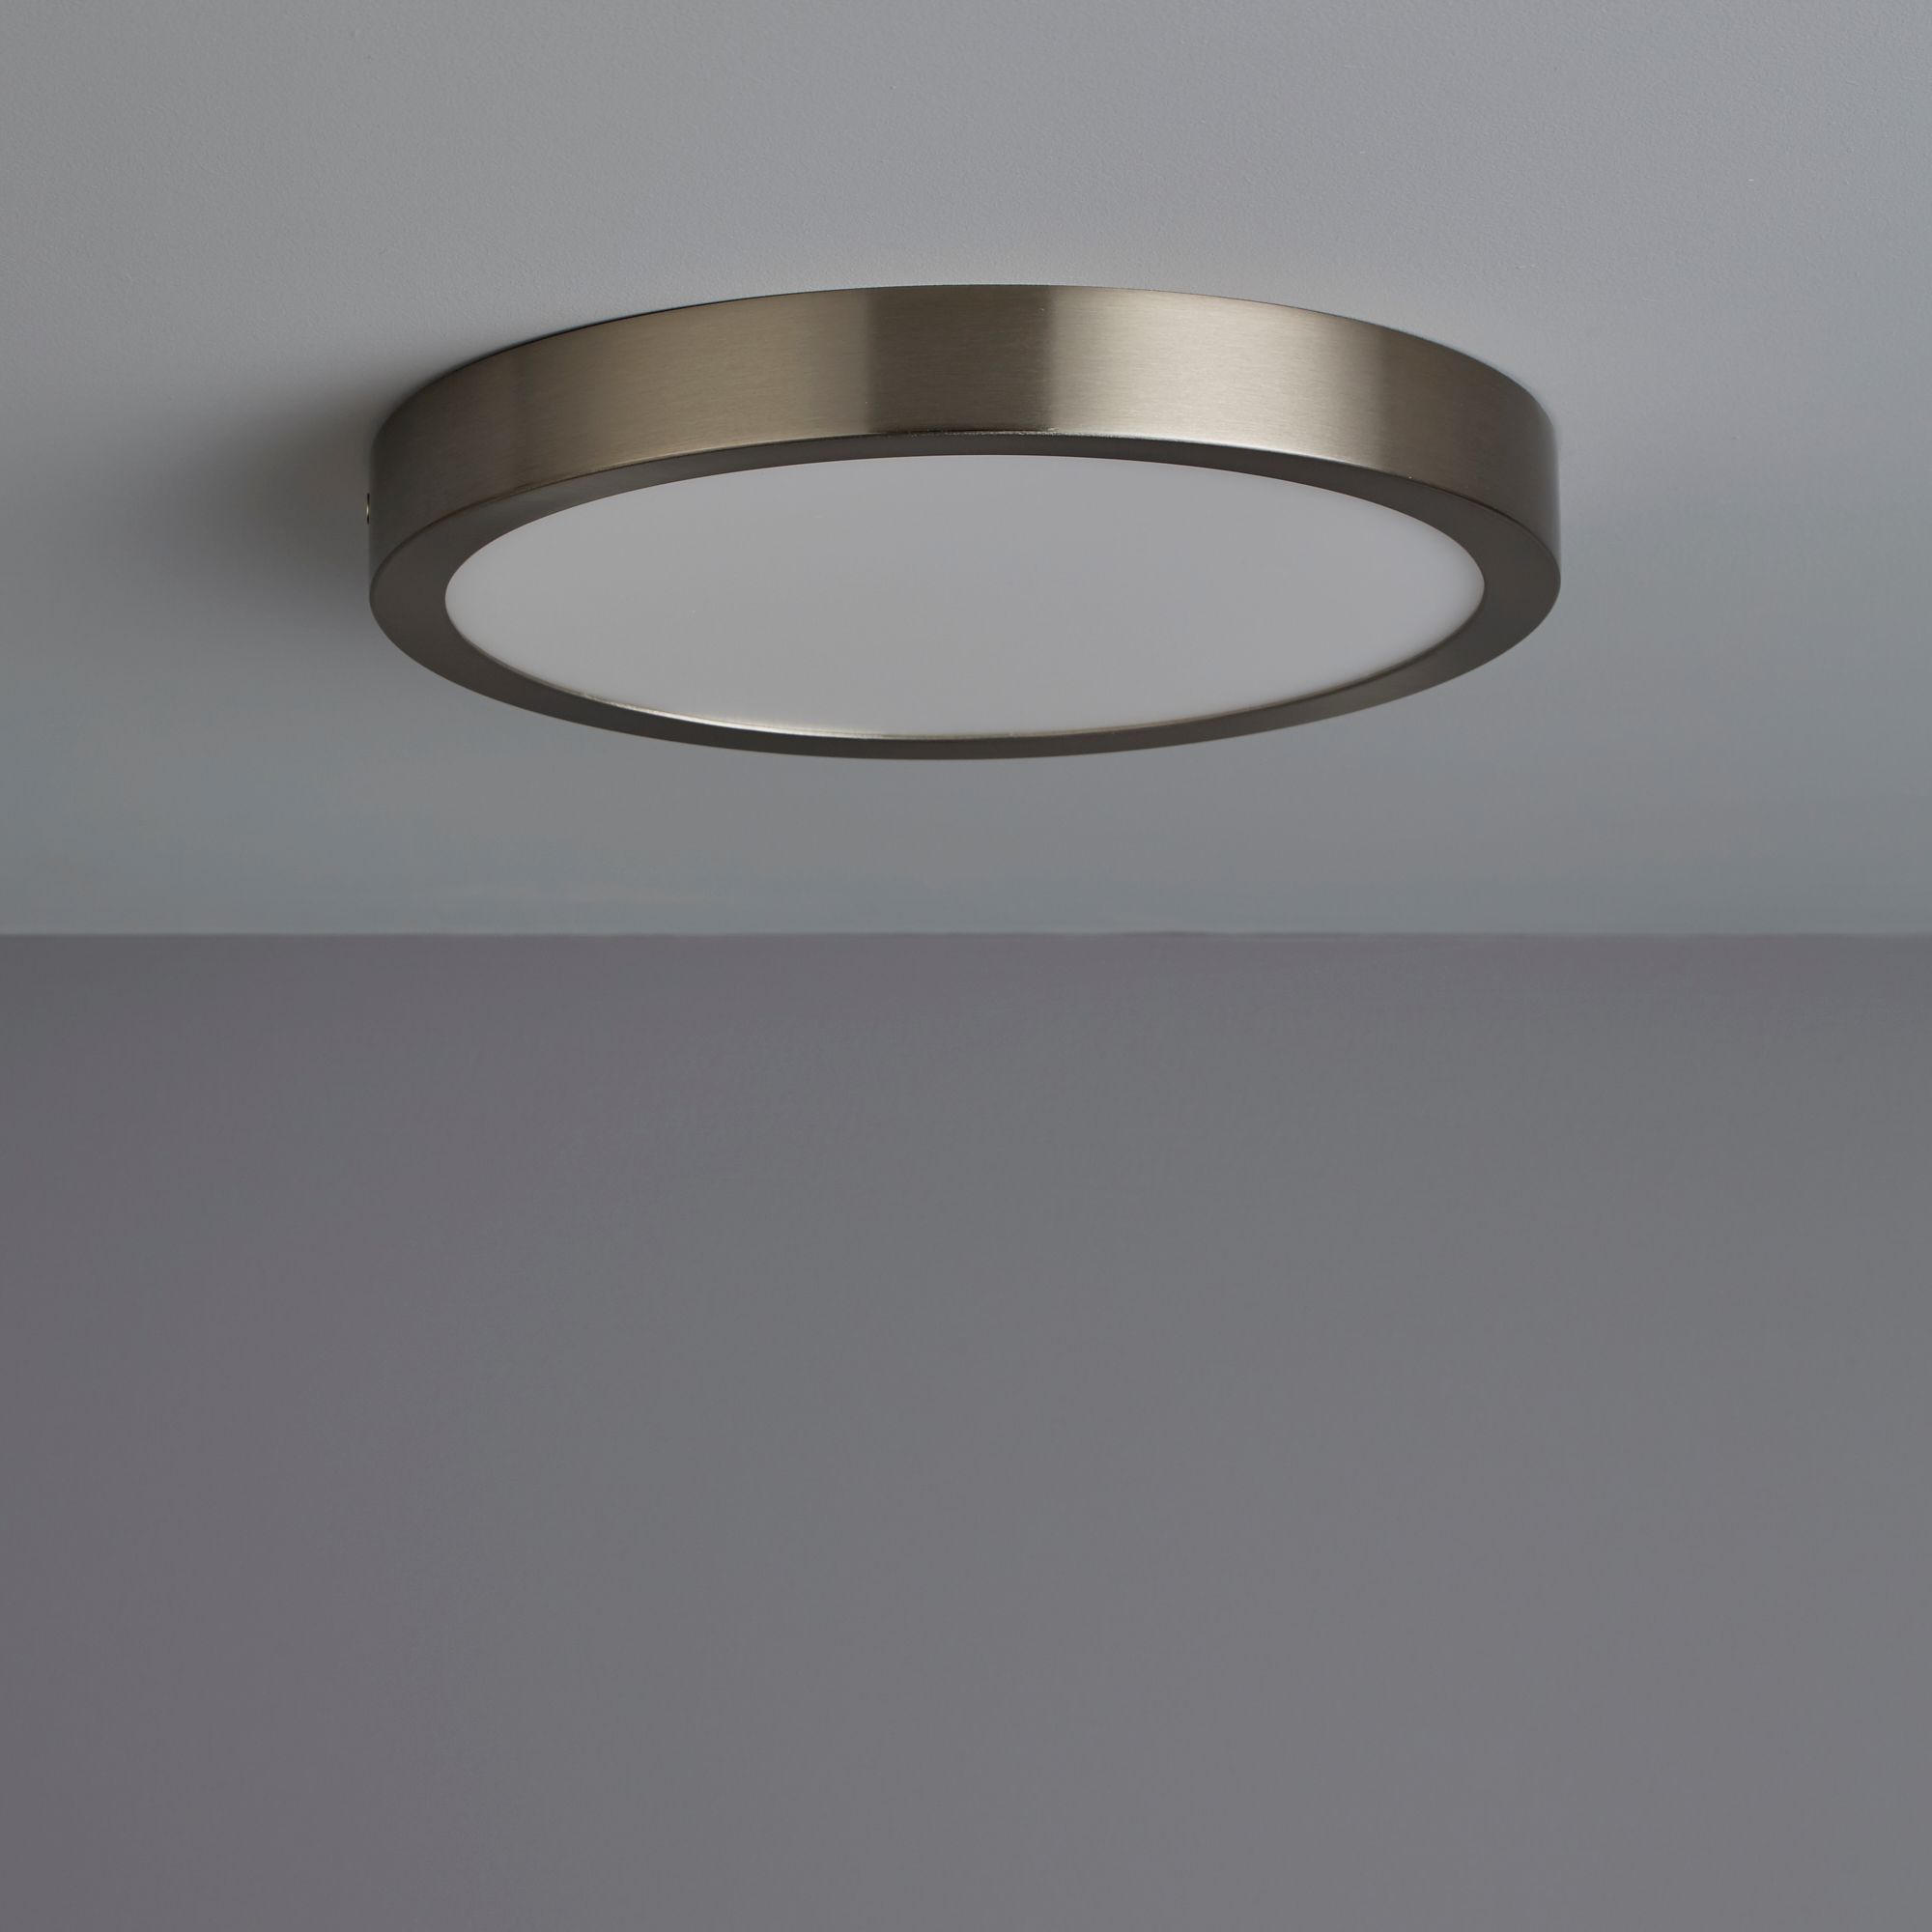 Aius Brushed chrome Ceiling light | Departments | DIY at B&Q